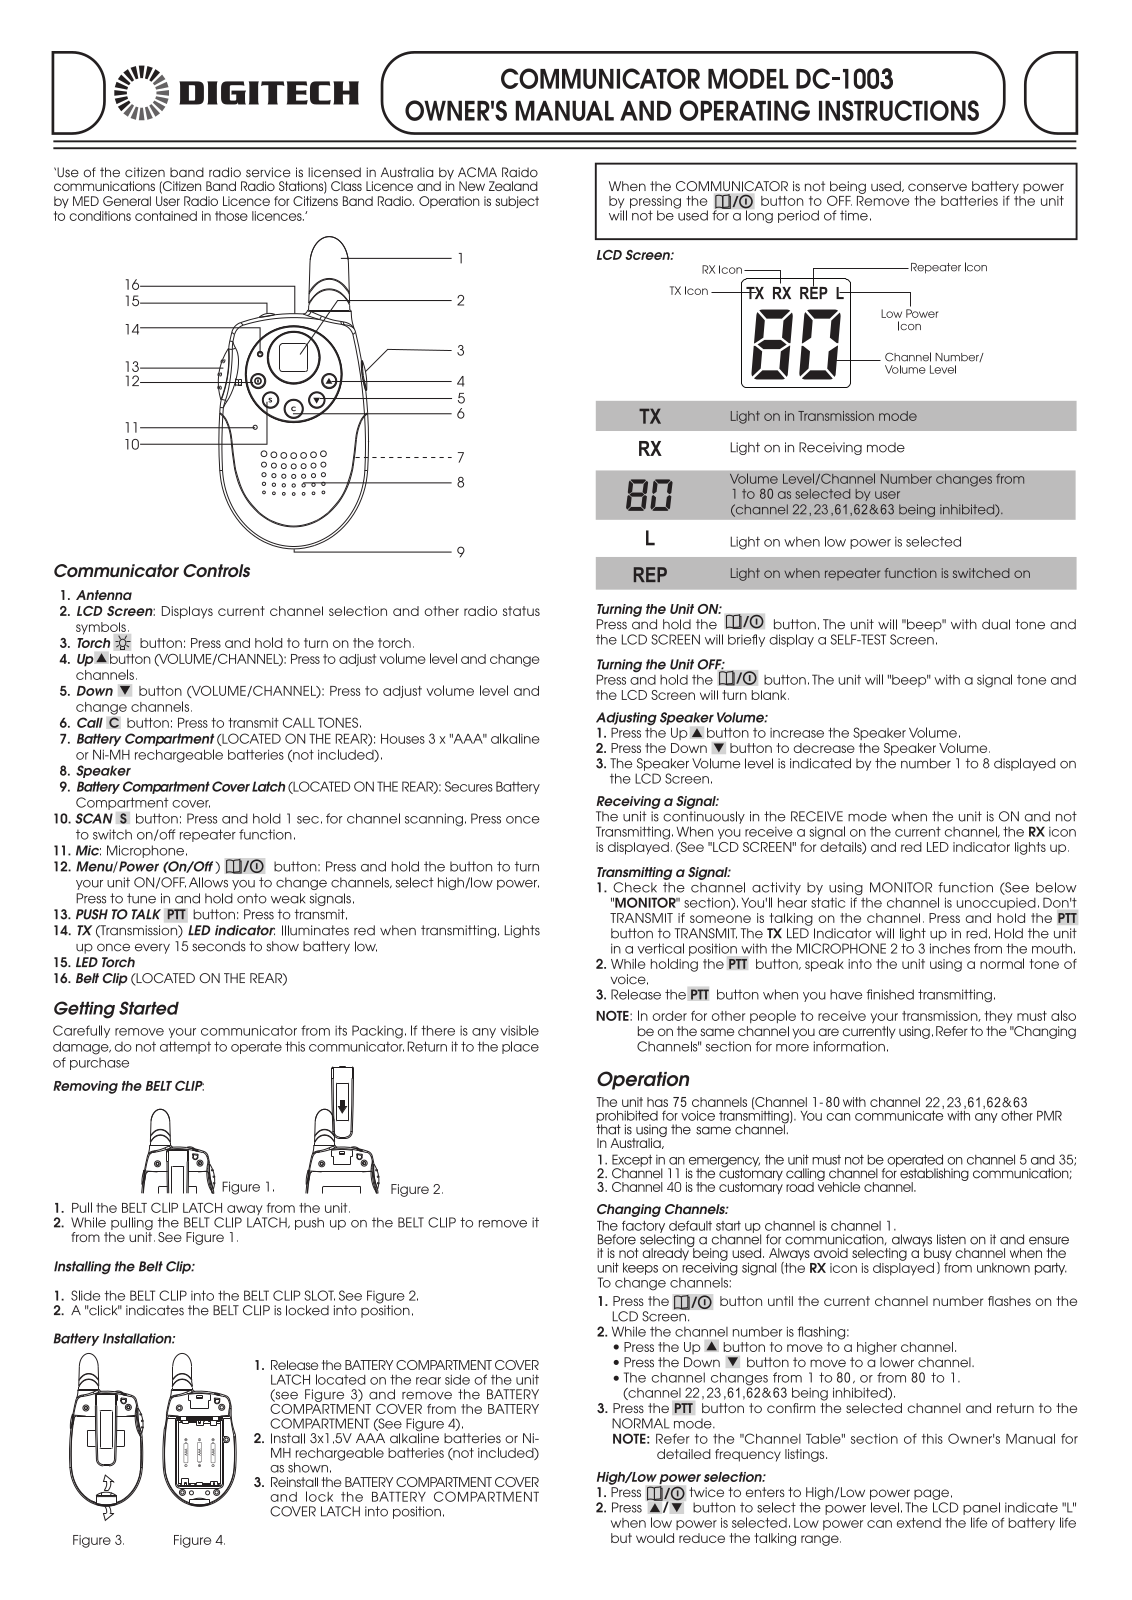 Digitech DC-1003 User Manual